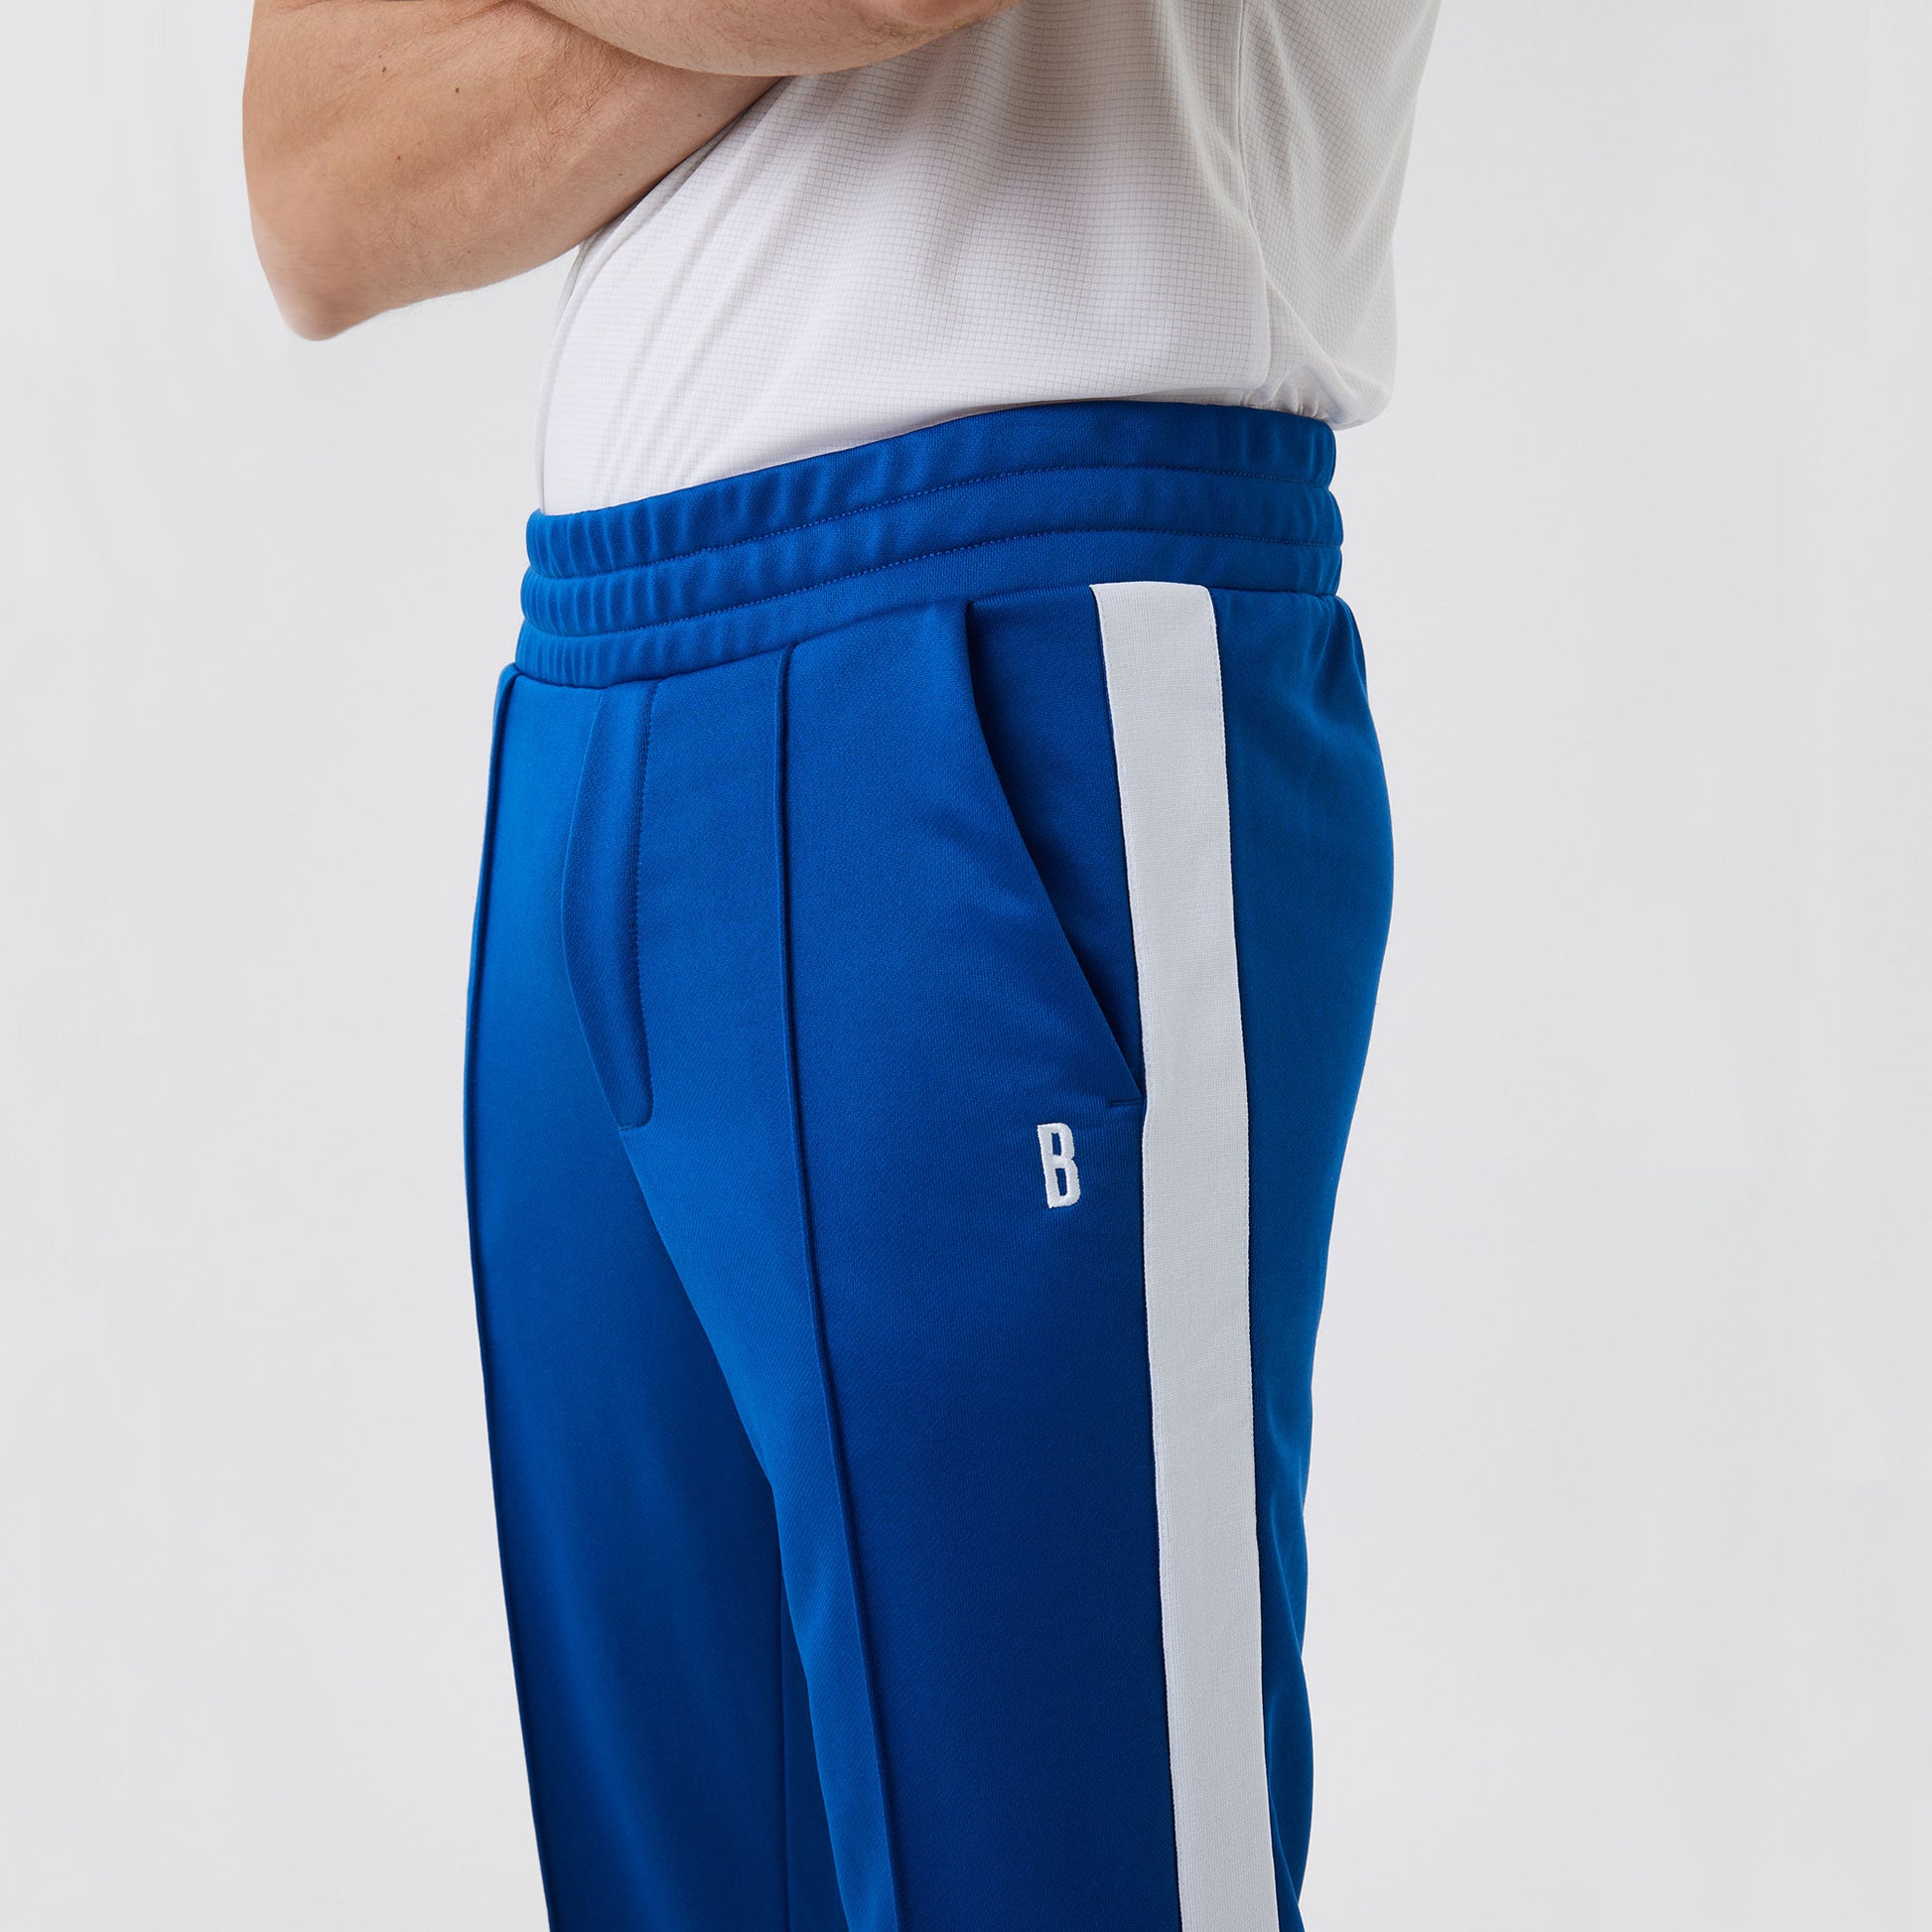 Björn Borg Ace Men's Tennis Pants Blue (3)